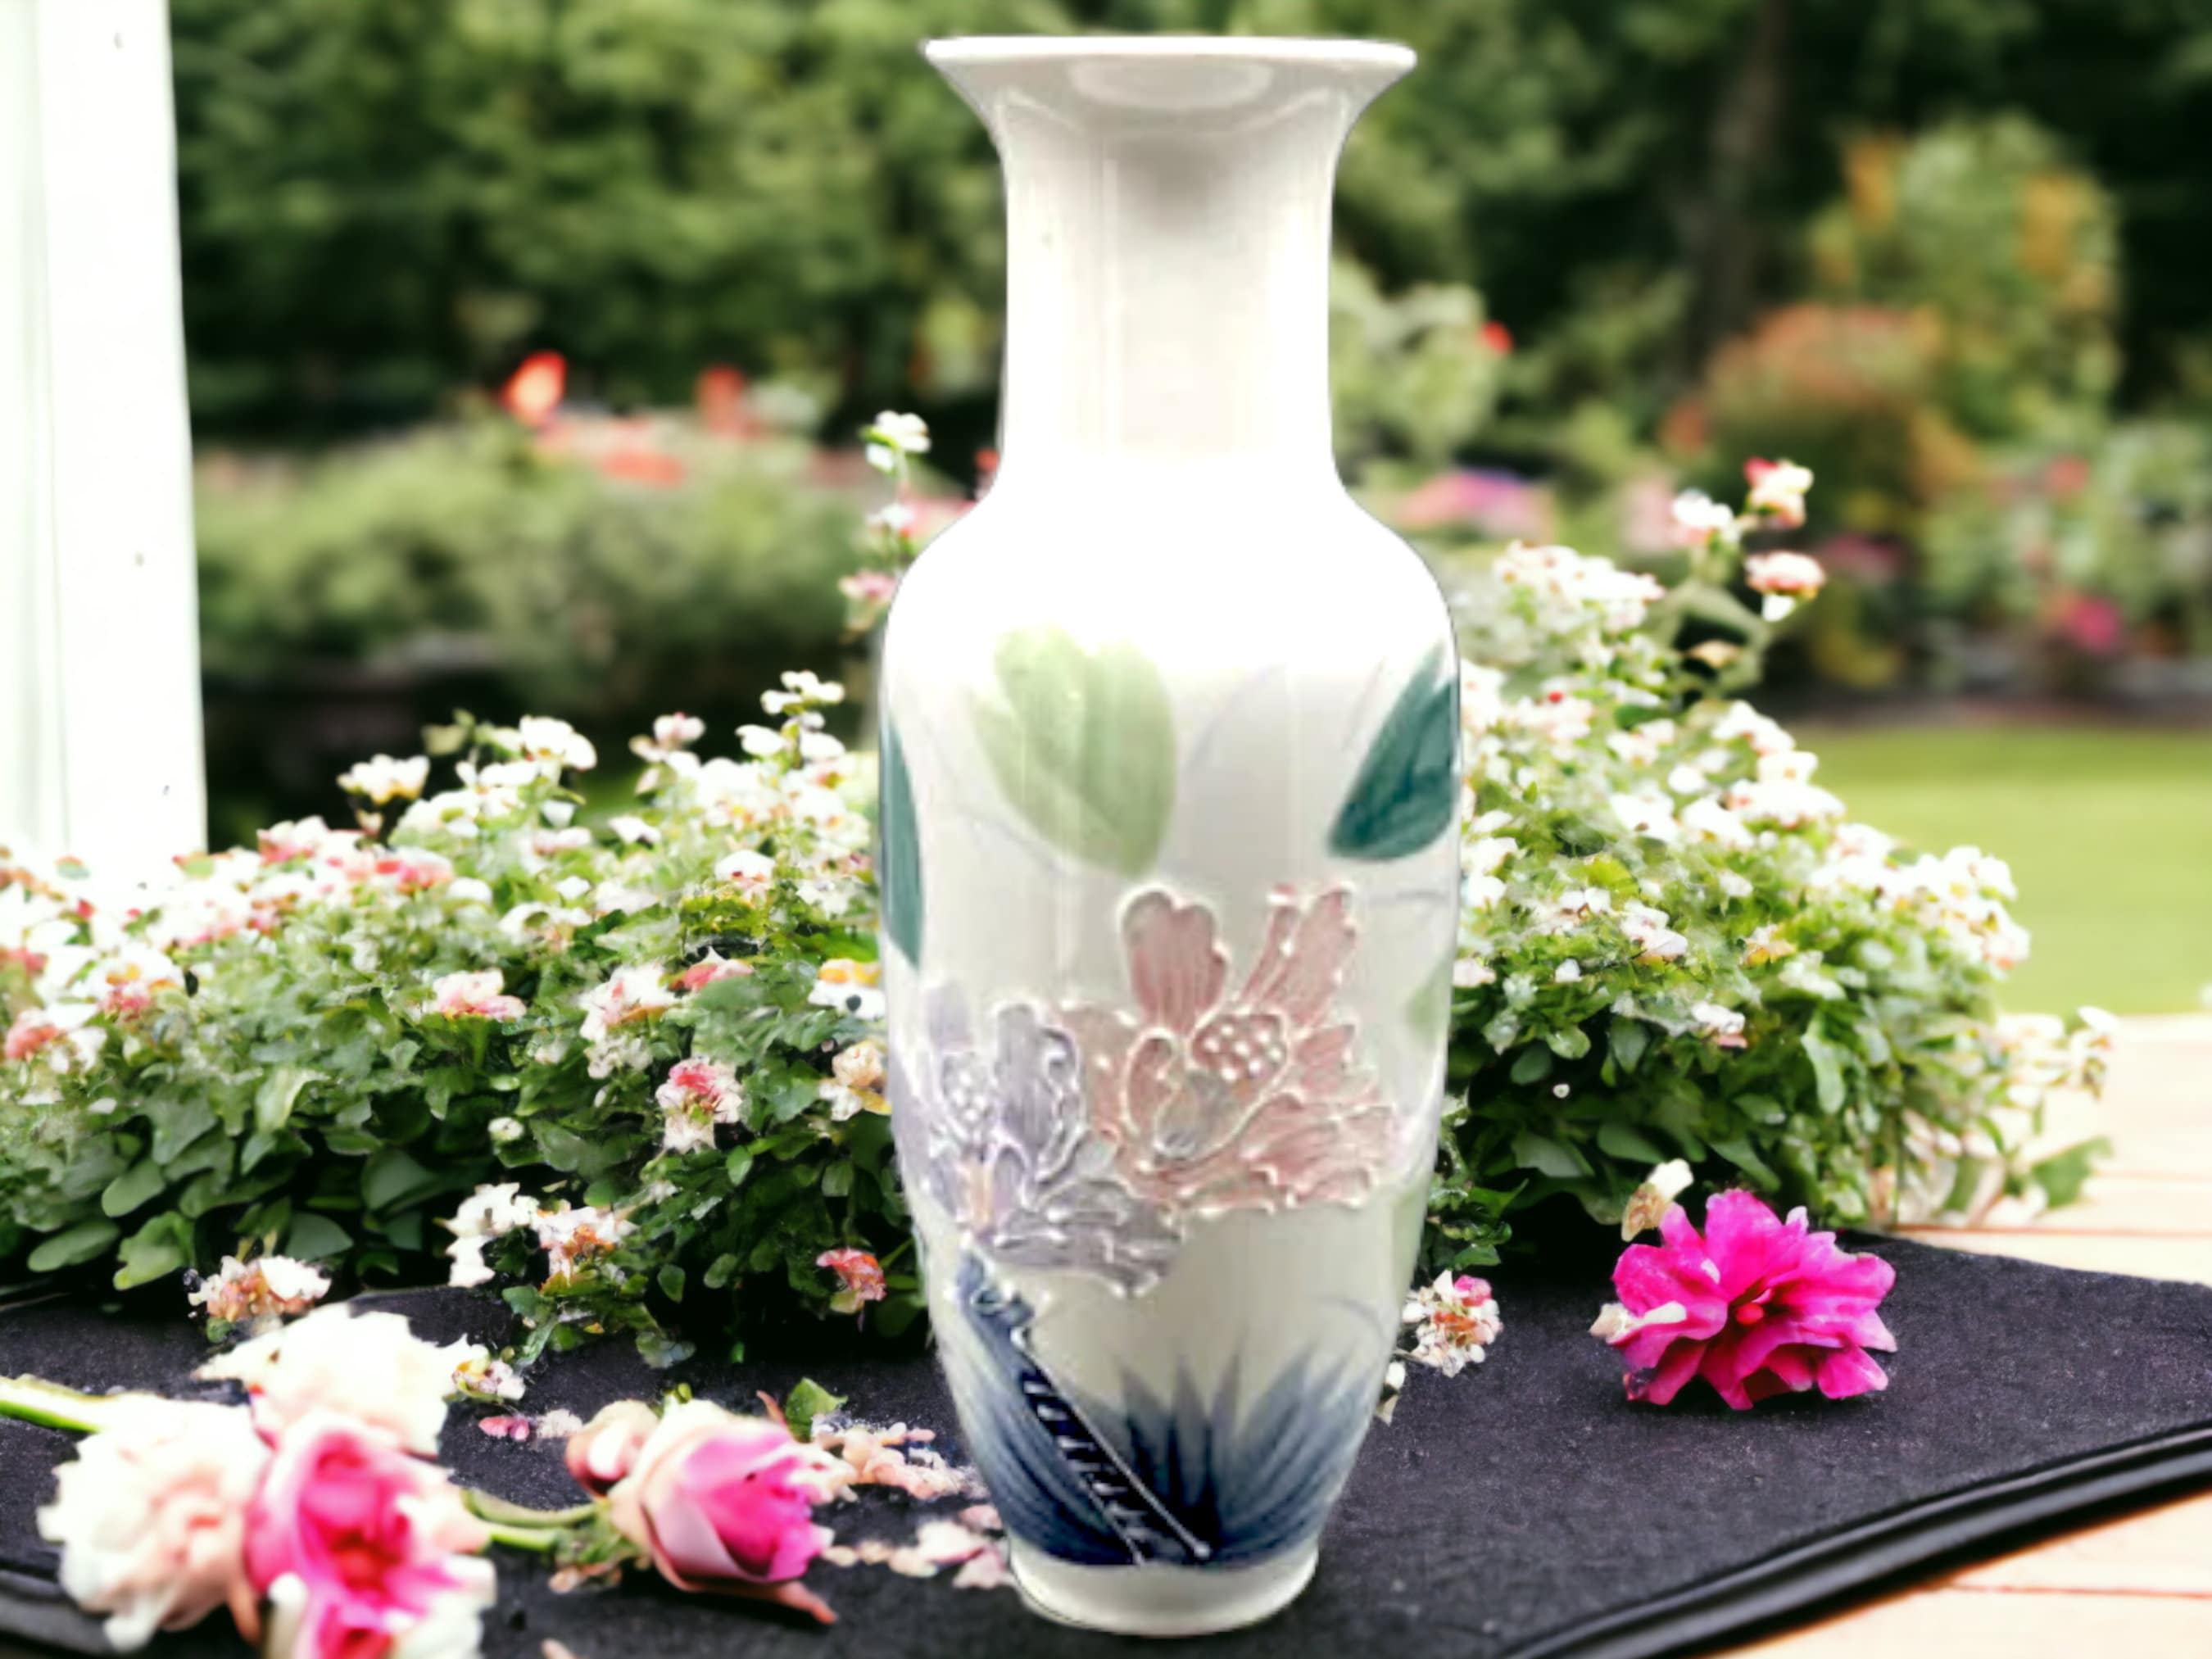 Vase Chinese Ceramic Porcelain Vase Home Decor Flower Vase for Shelf Home  Décor Japanese Vase 10.5 Inch,Sophisticated Vessel for Wedding Decorative